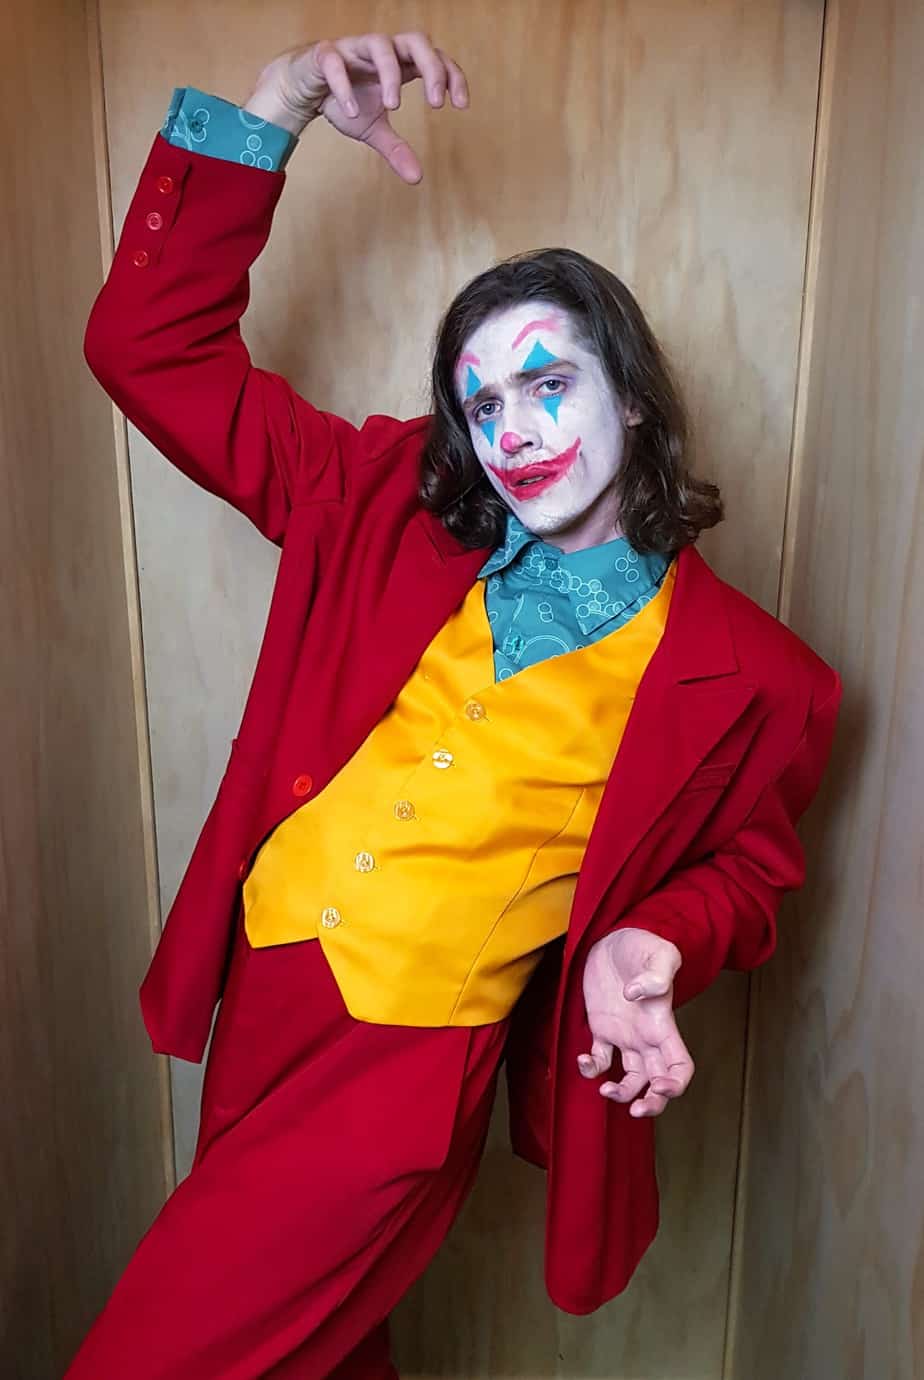 Joker 2019 Joaquin Phoenix Movie Leather Suit Replica, 41% OFF